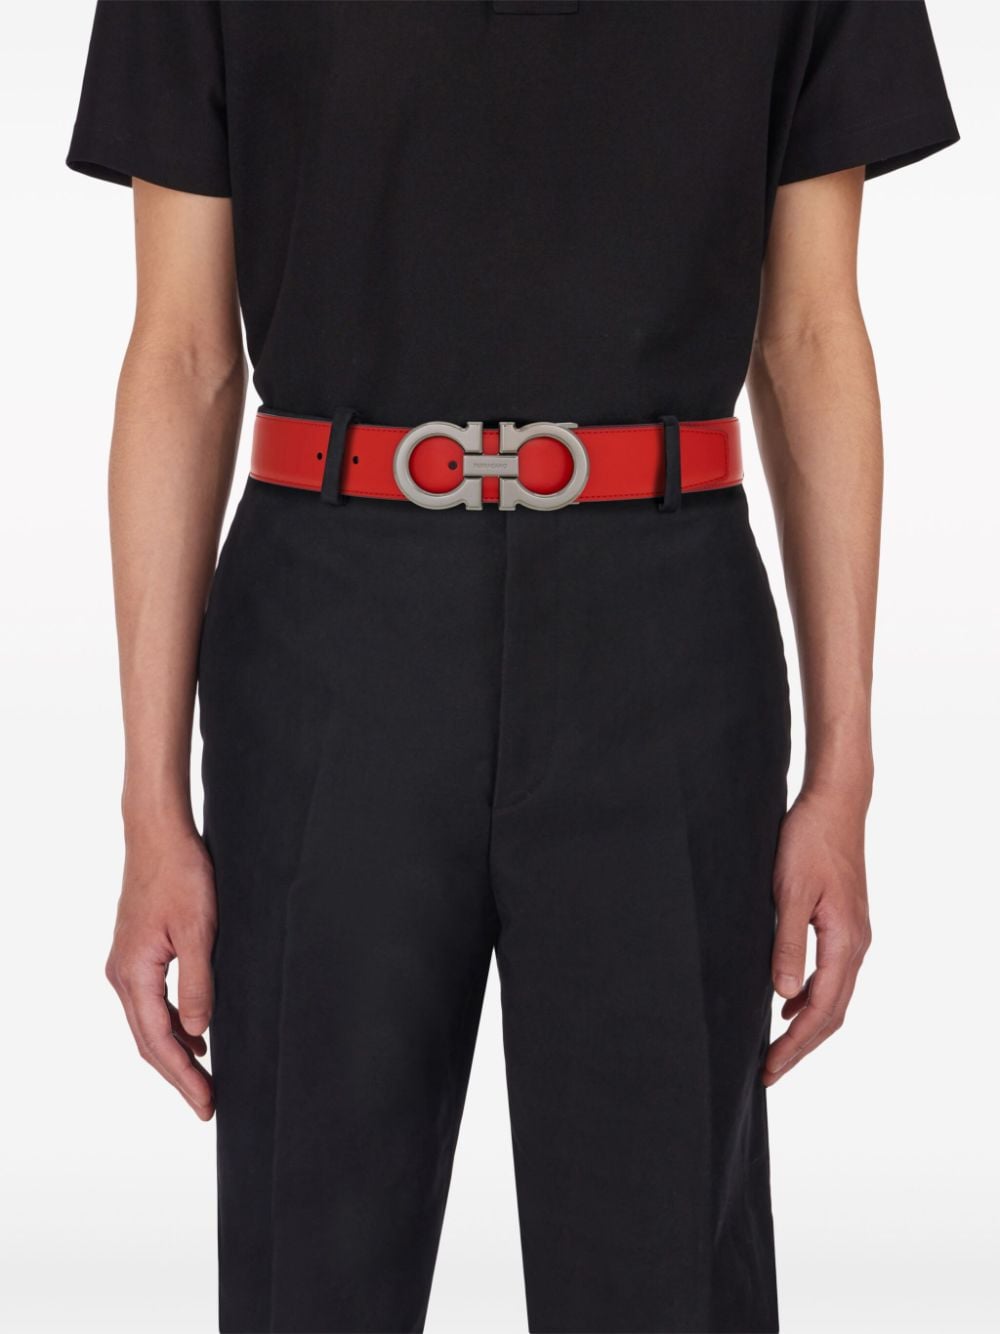 Shop Ferragamo Gancini-buckle Reversible Leather Belt In Red